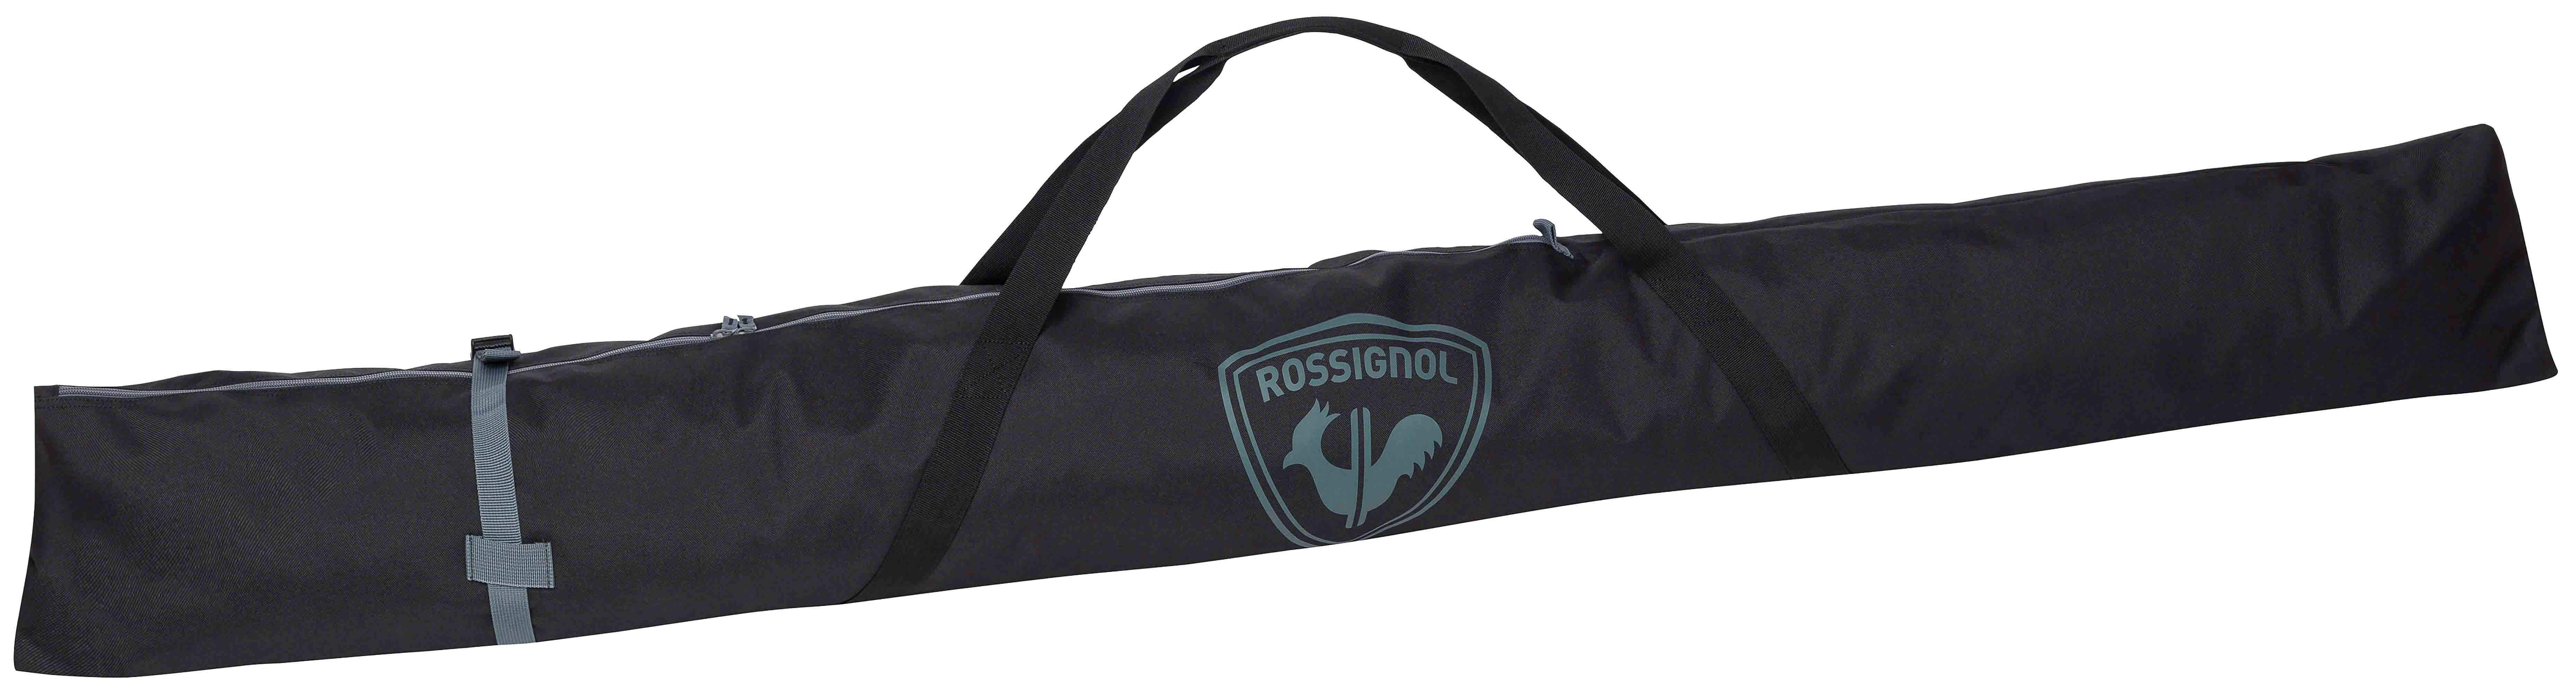 Krepšys slidėms Rossingnol Basic kaina | pigu.lt